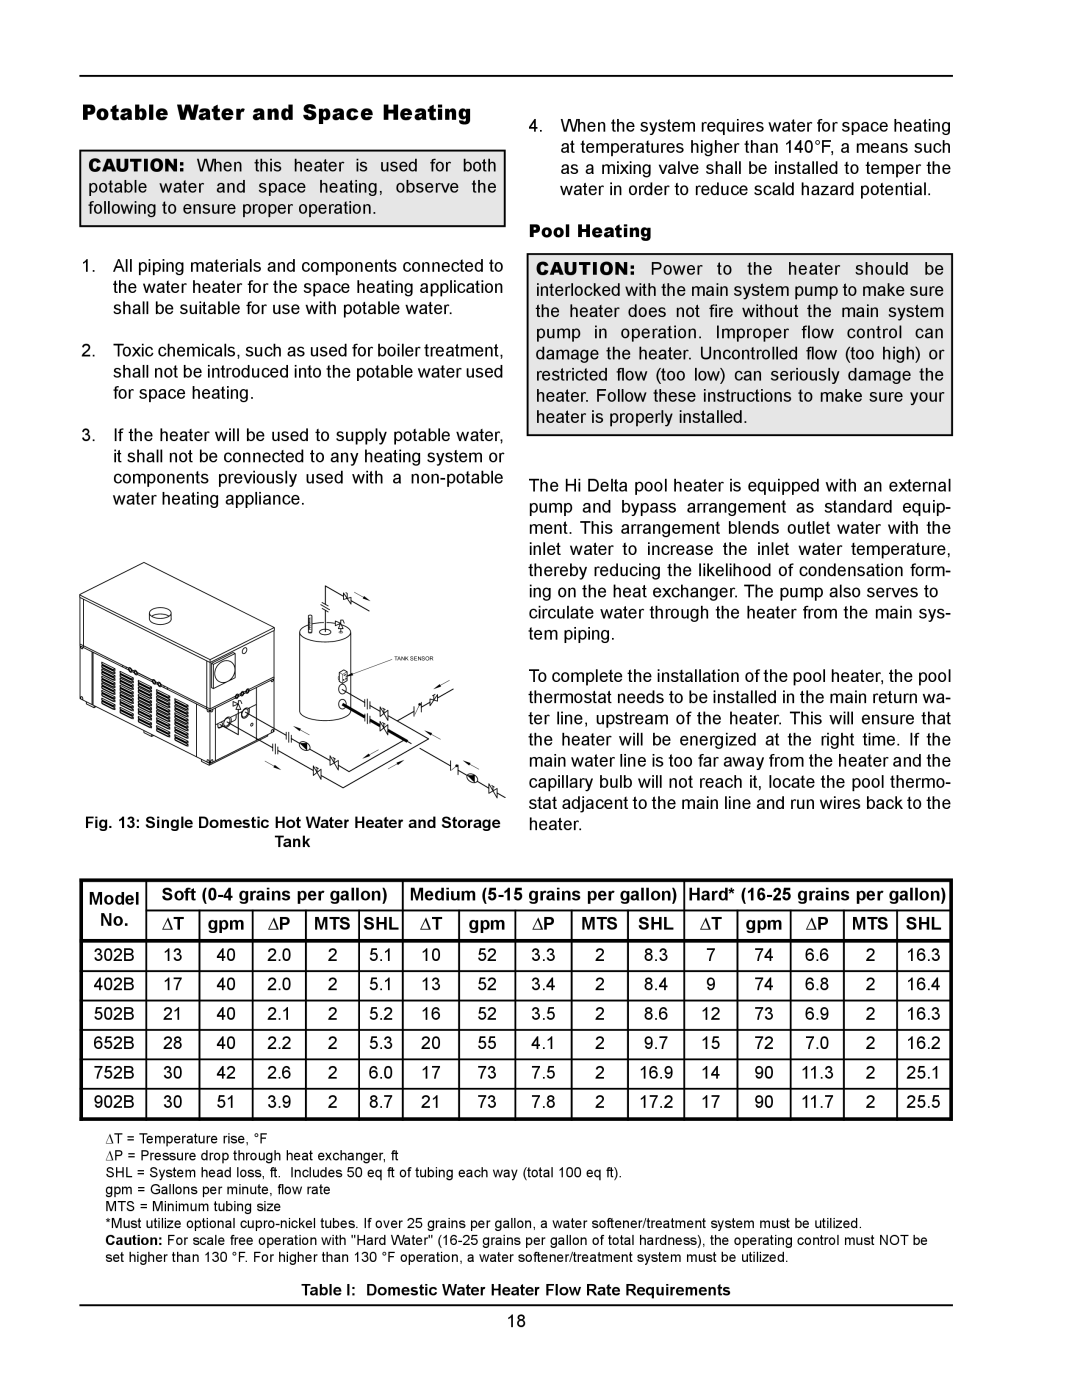 Raypak 902B, 302B manual Potable Water and Space Heating 